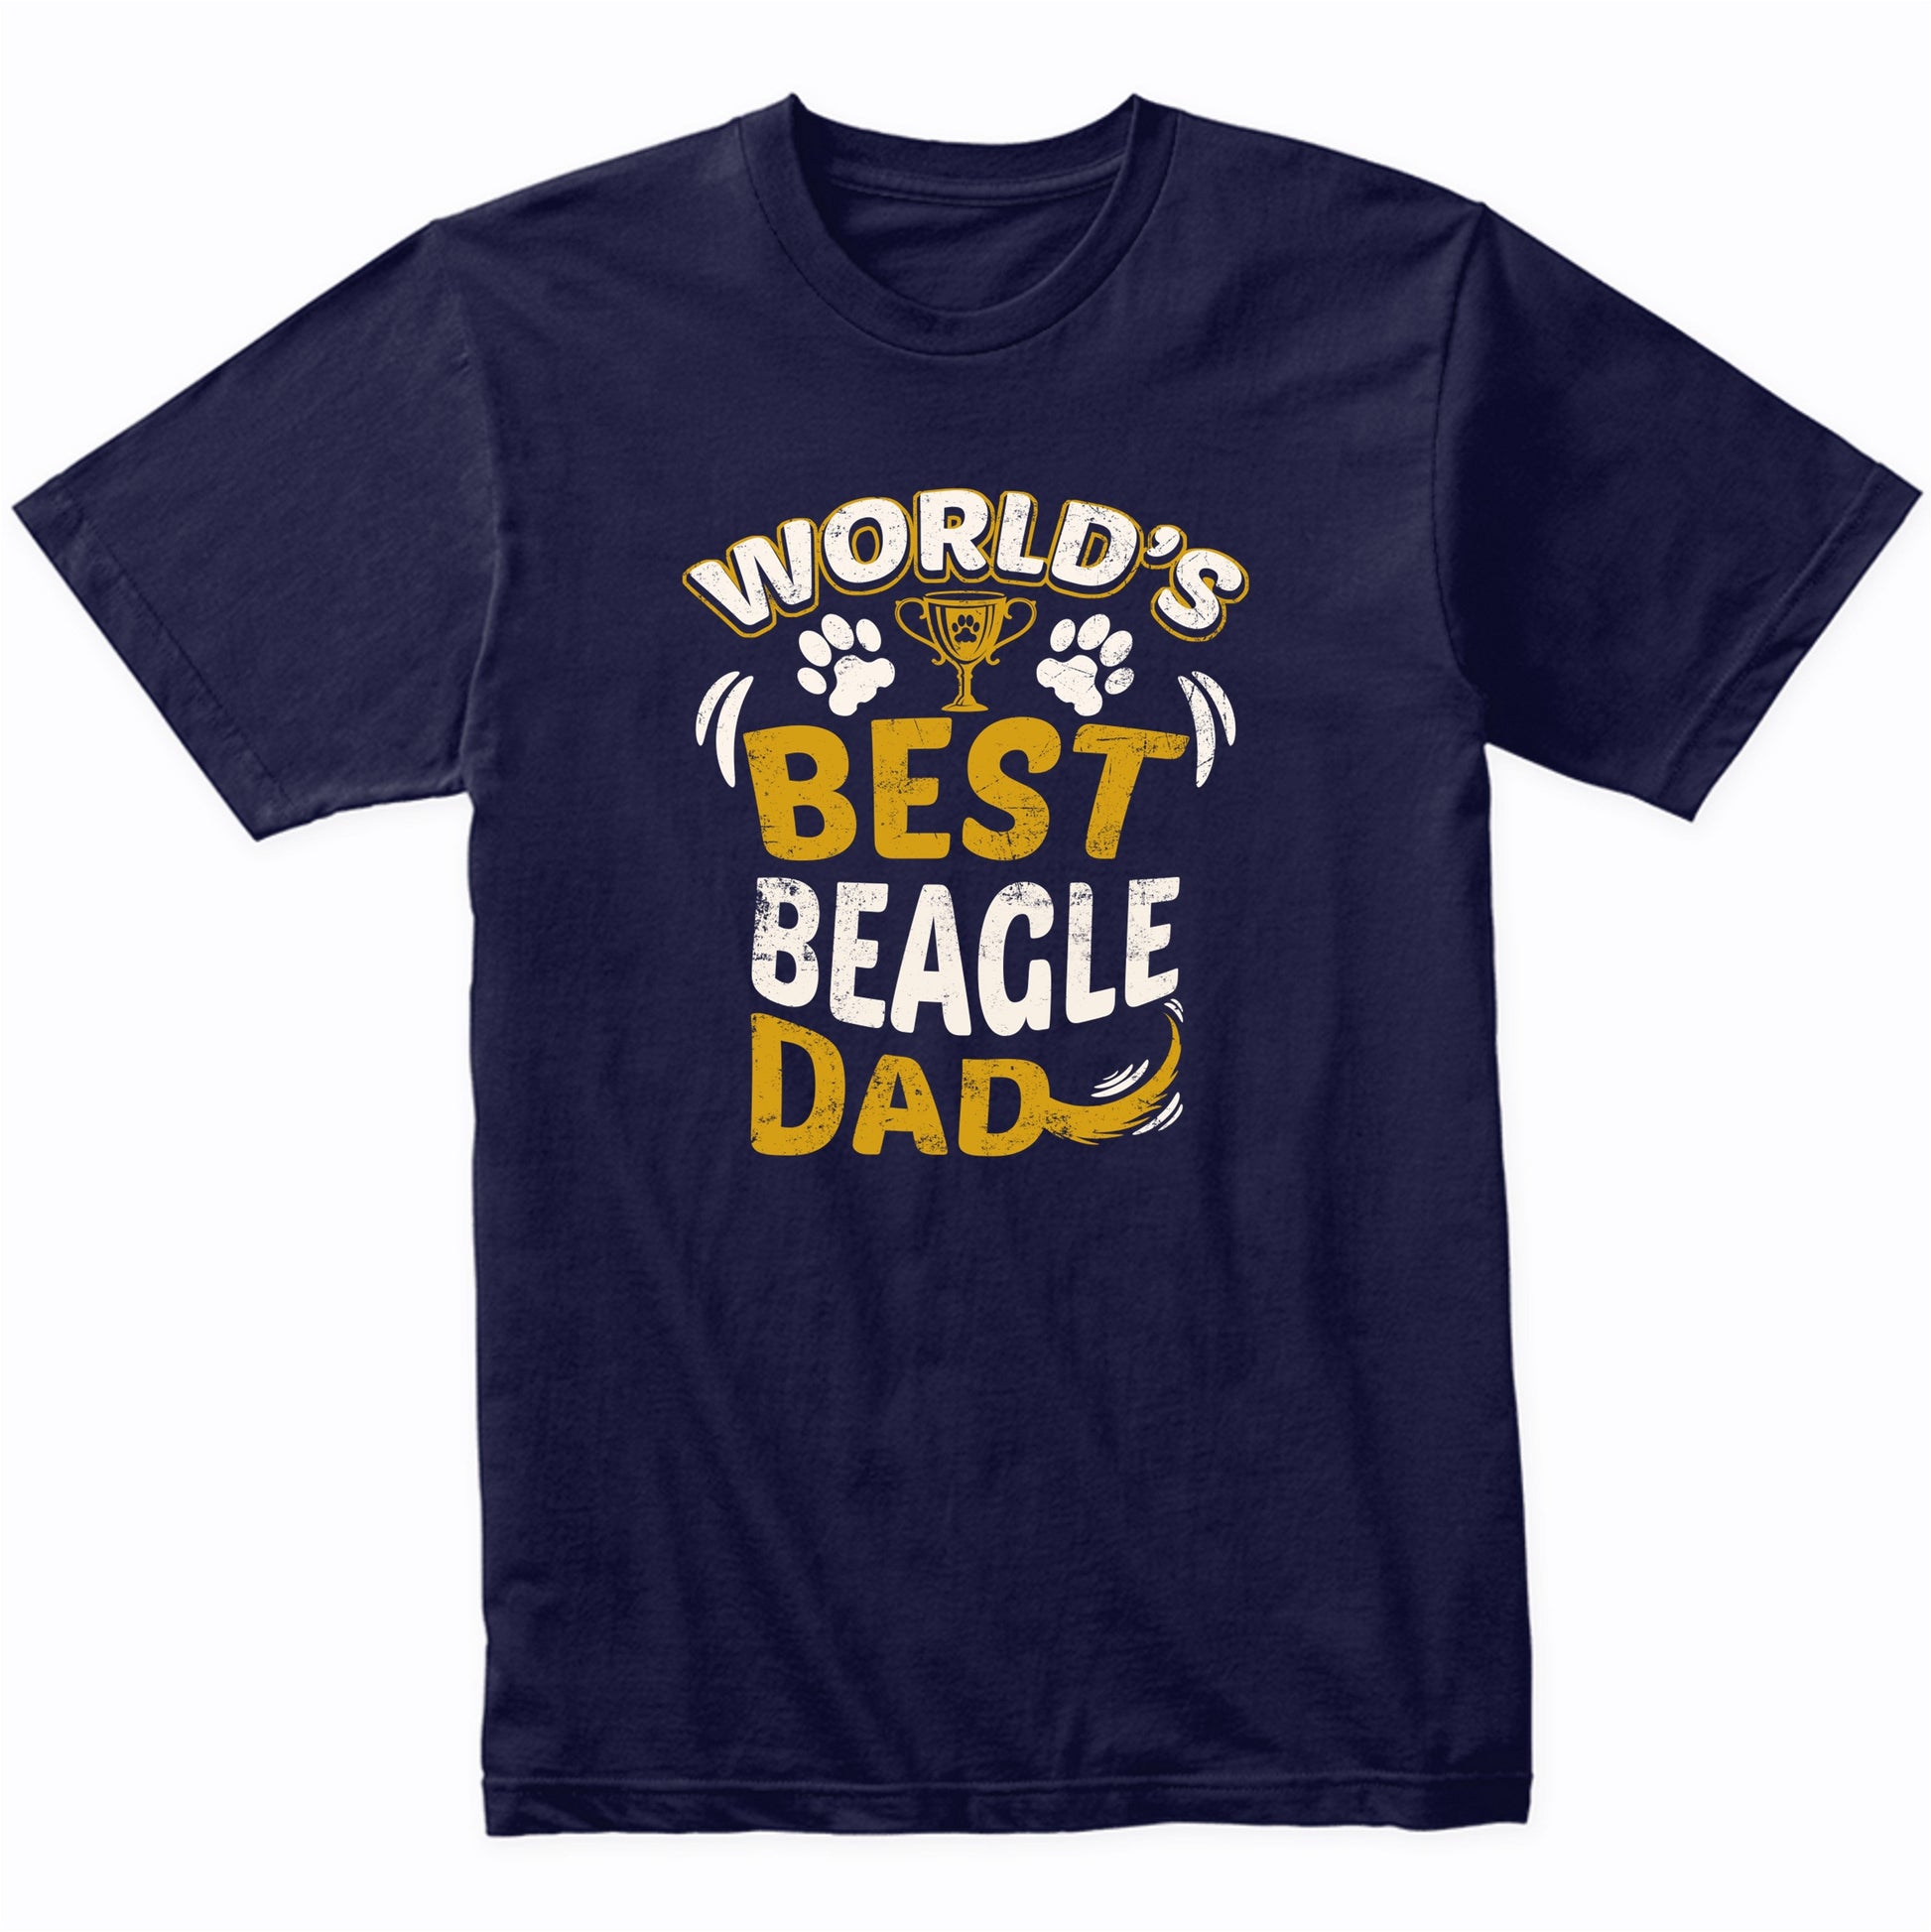 World's Best Beagle Dad Graphic T-Shirt